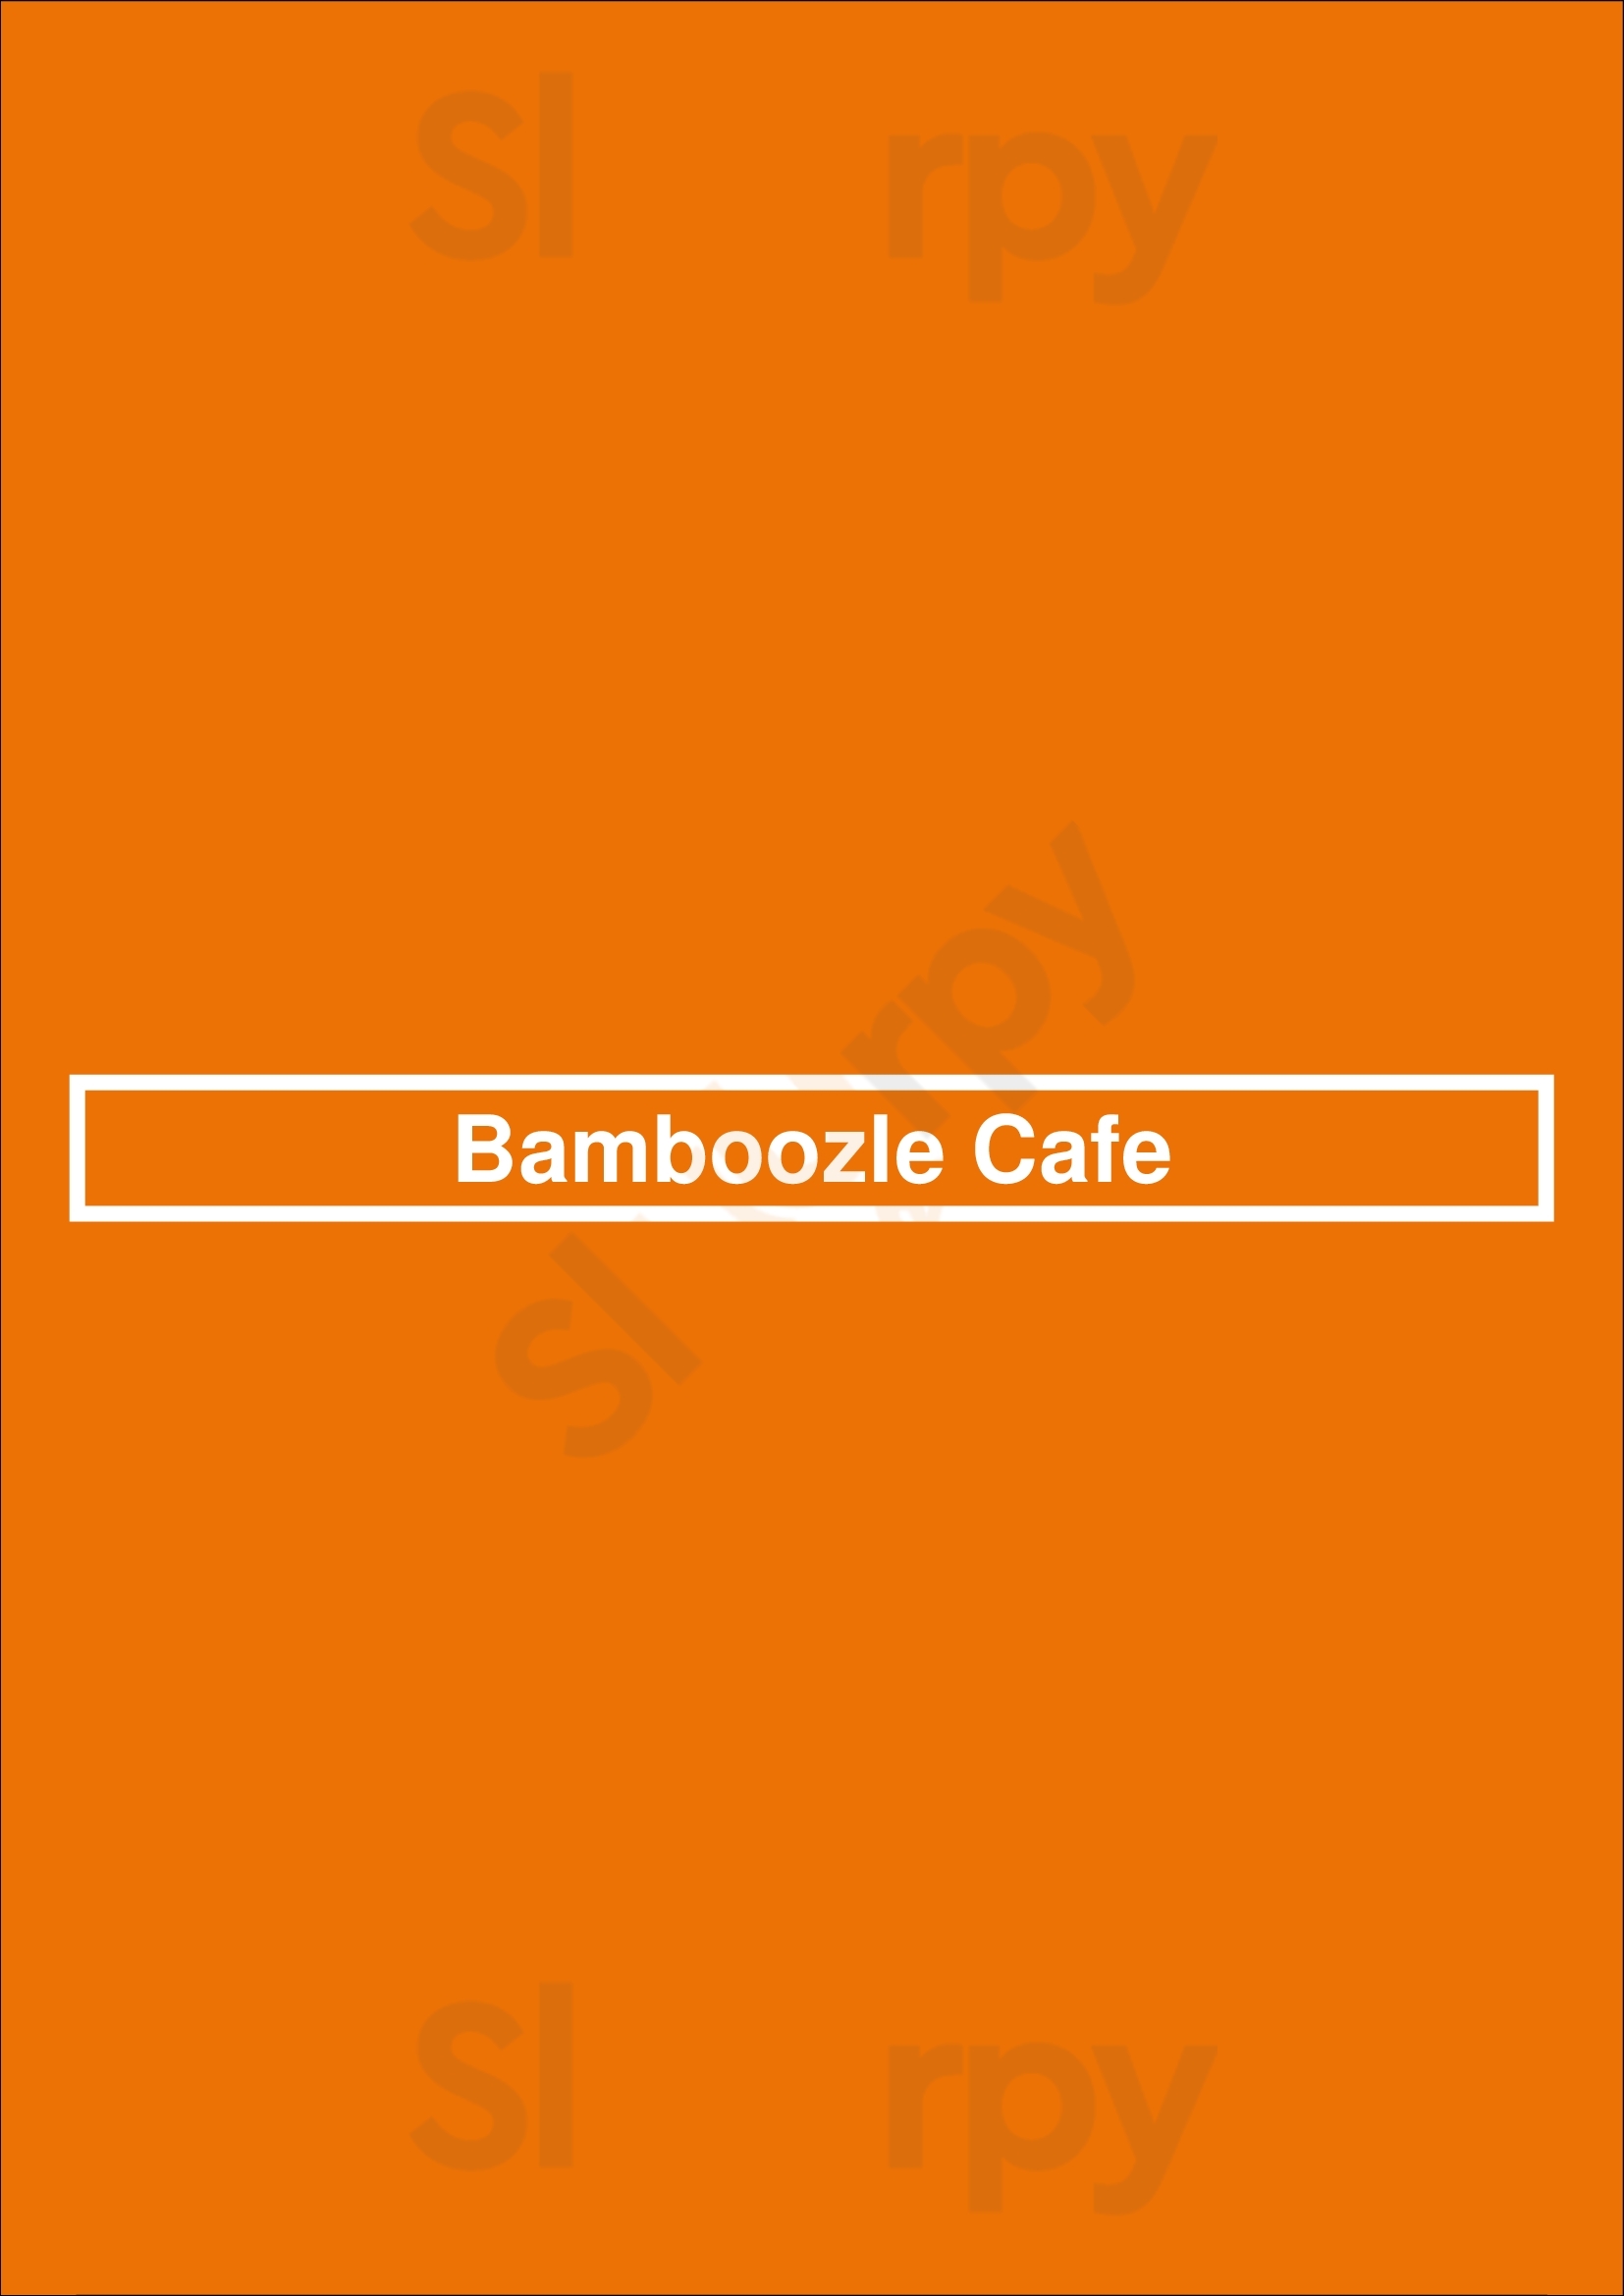 Bamboozle Cafe Tampa Menu - 1